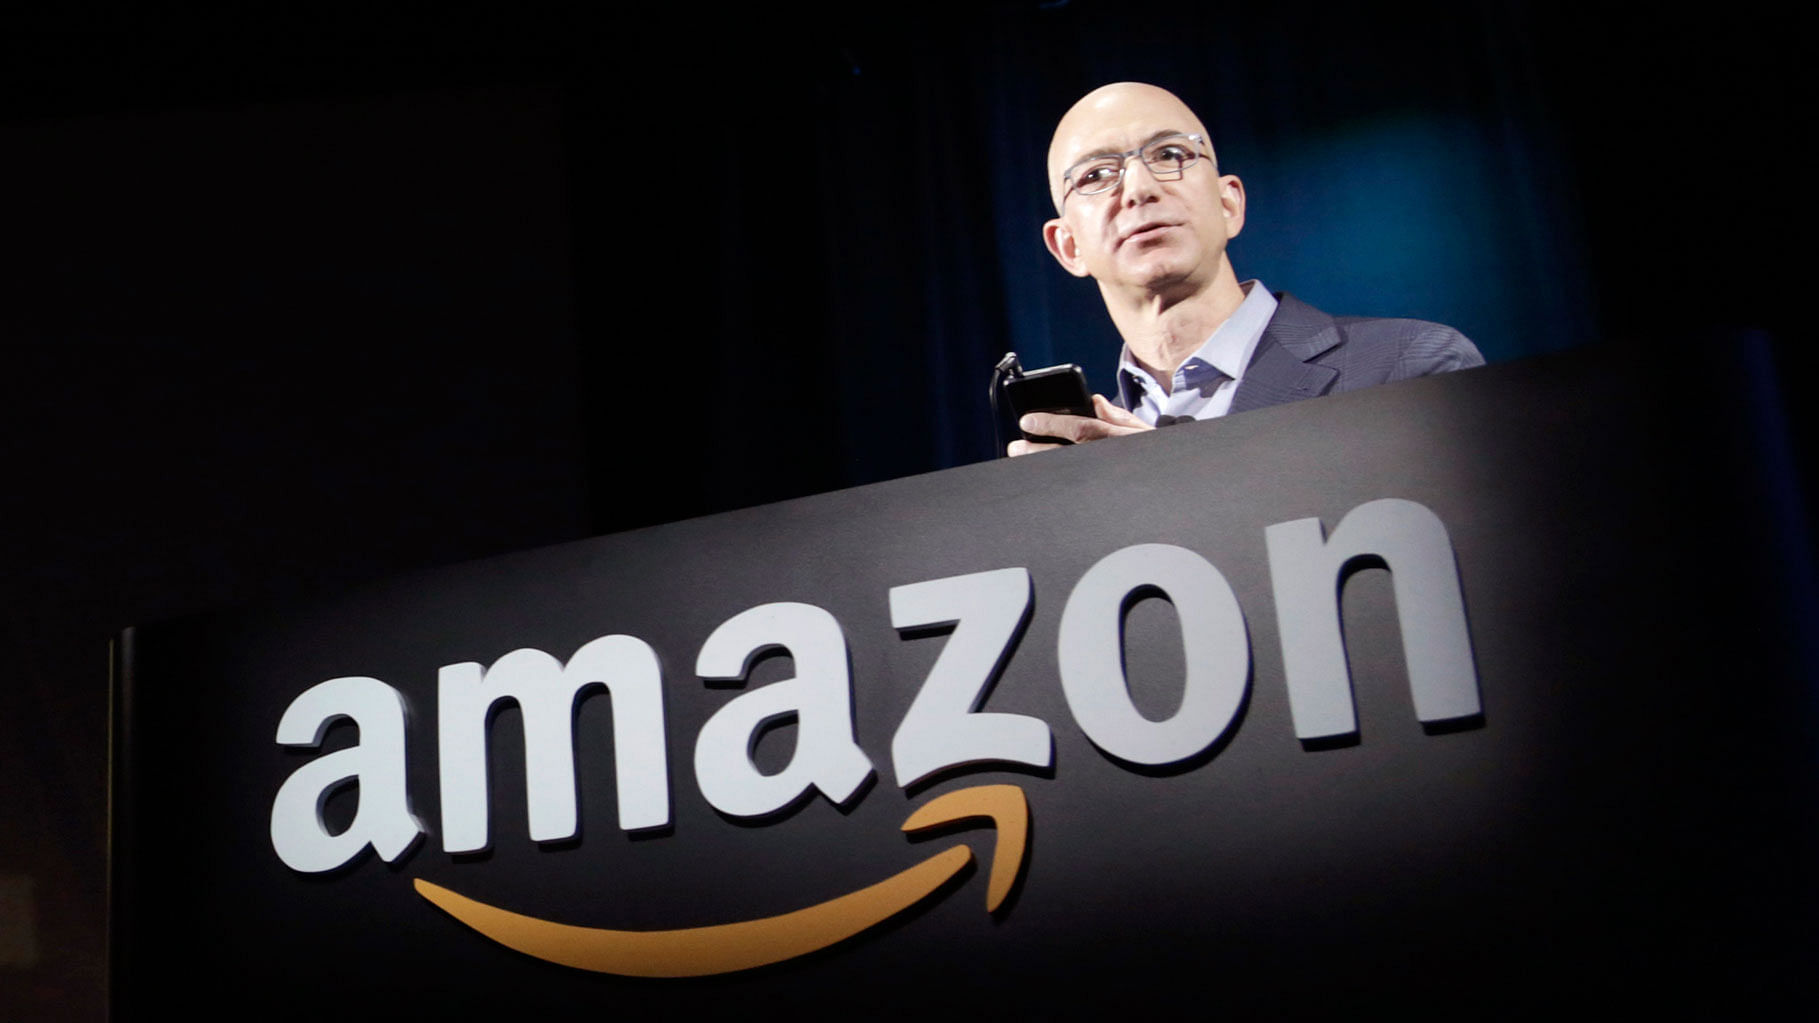 File Photo of Amazon CEO Jeff Bezos